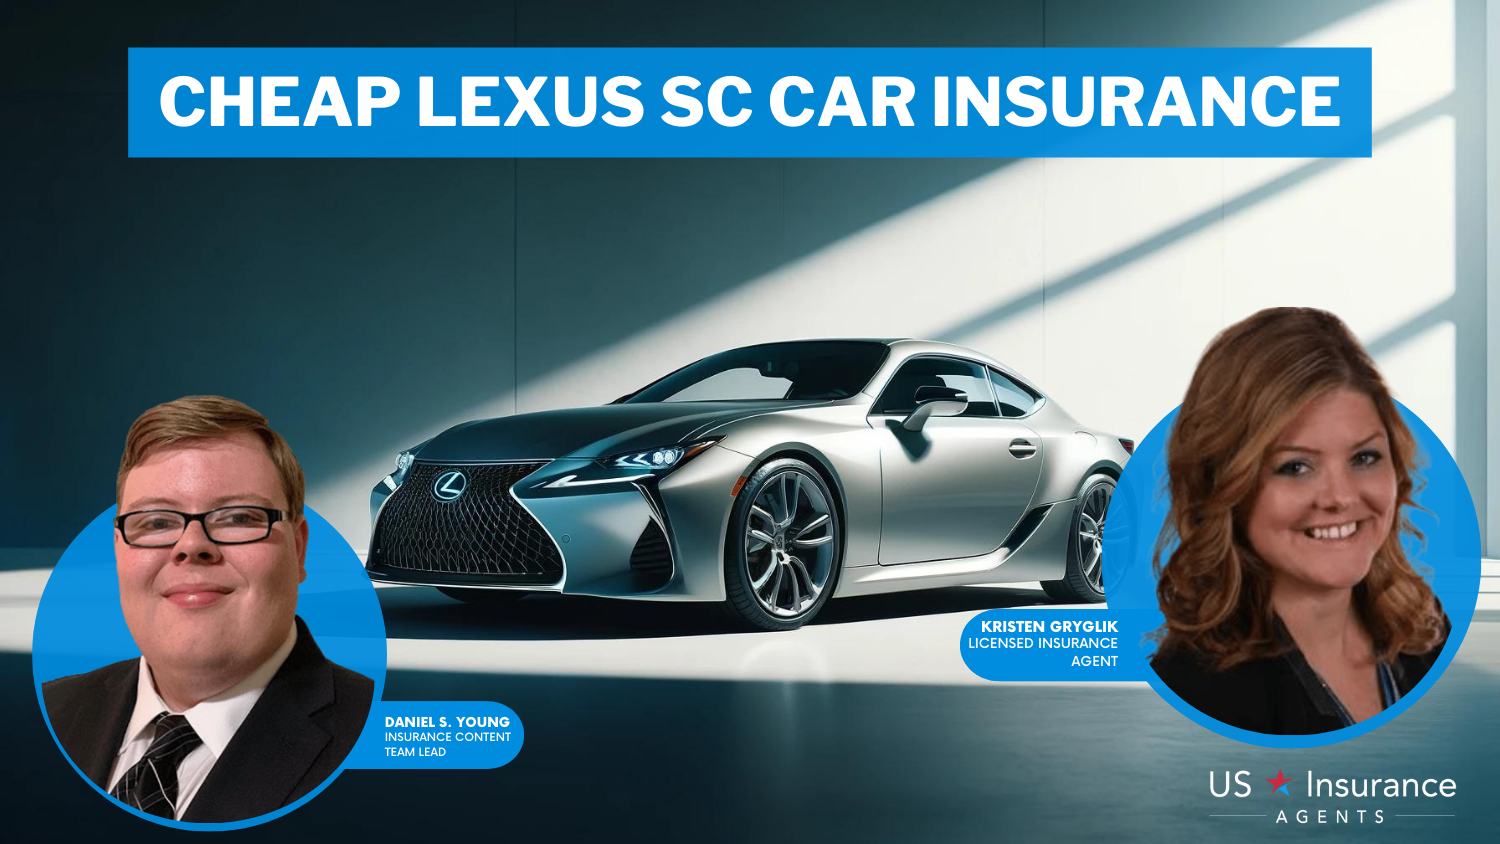 Cheap Lexus SC Car Insurance: erie, Auto-Owners, and Mercury